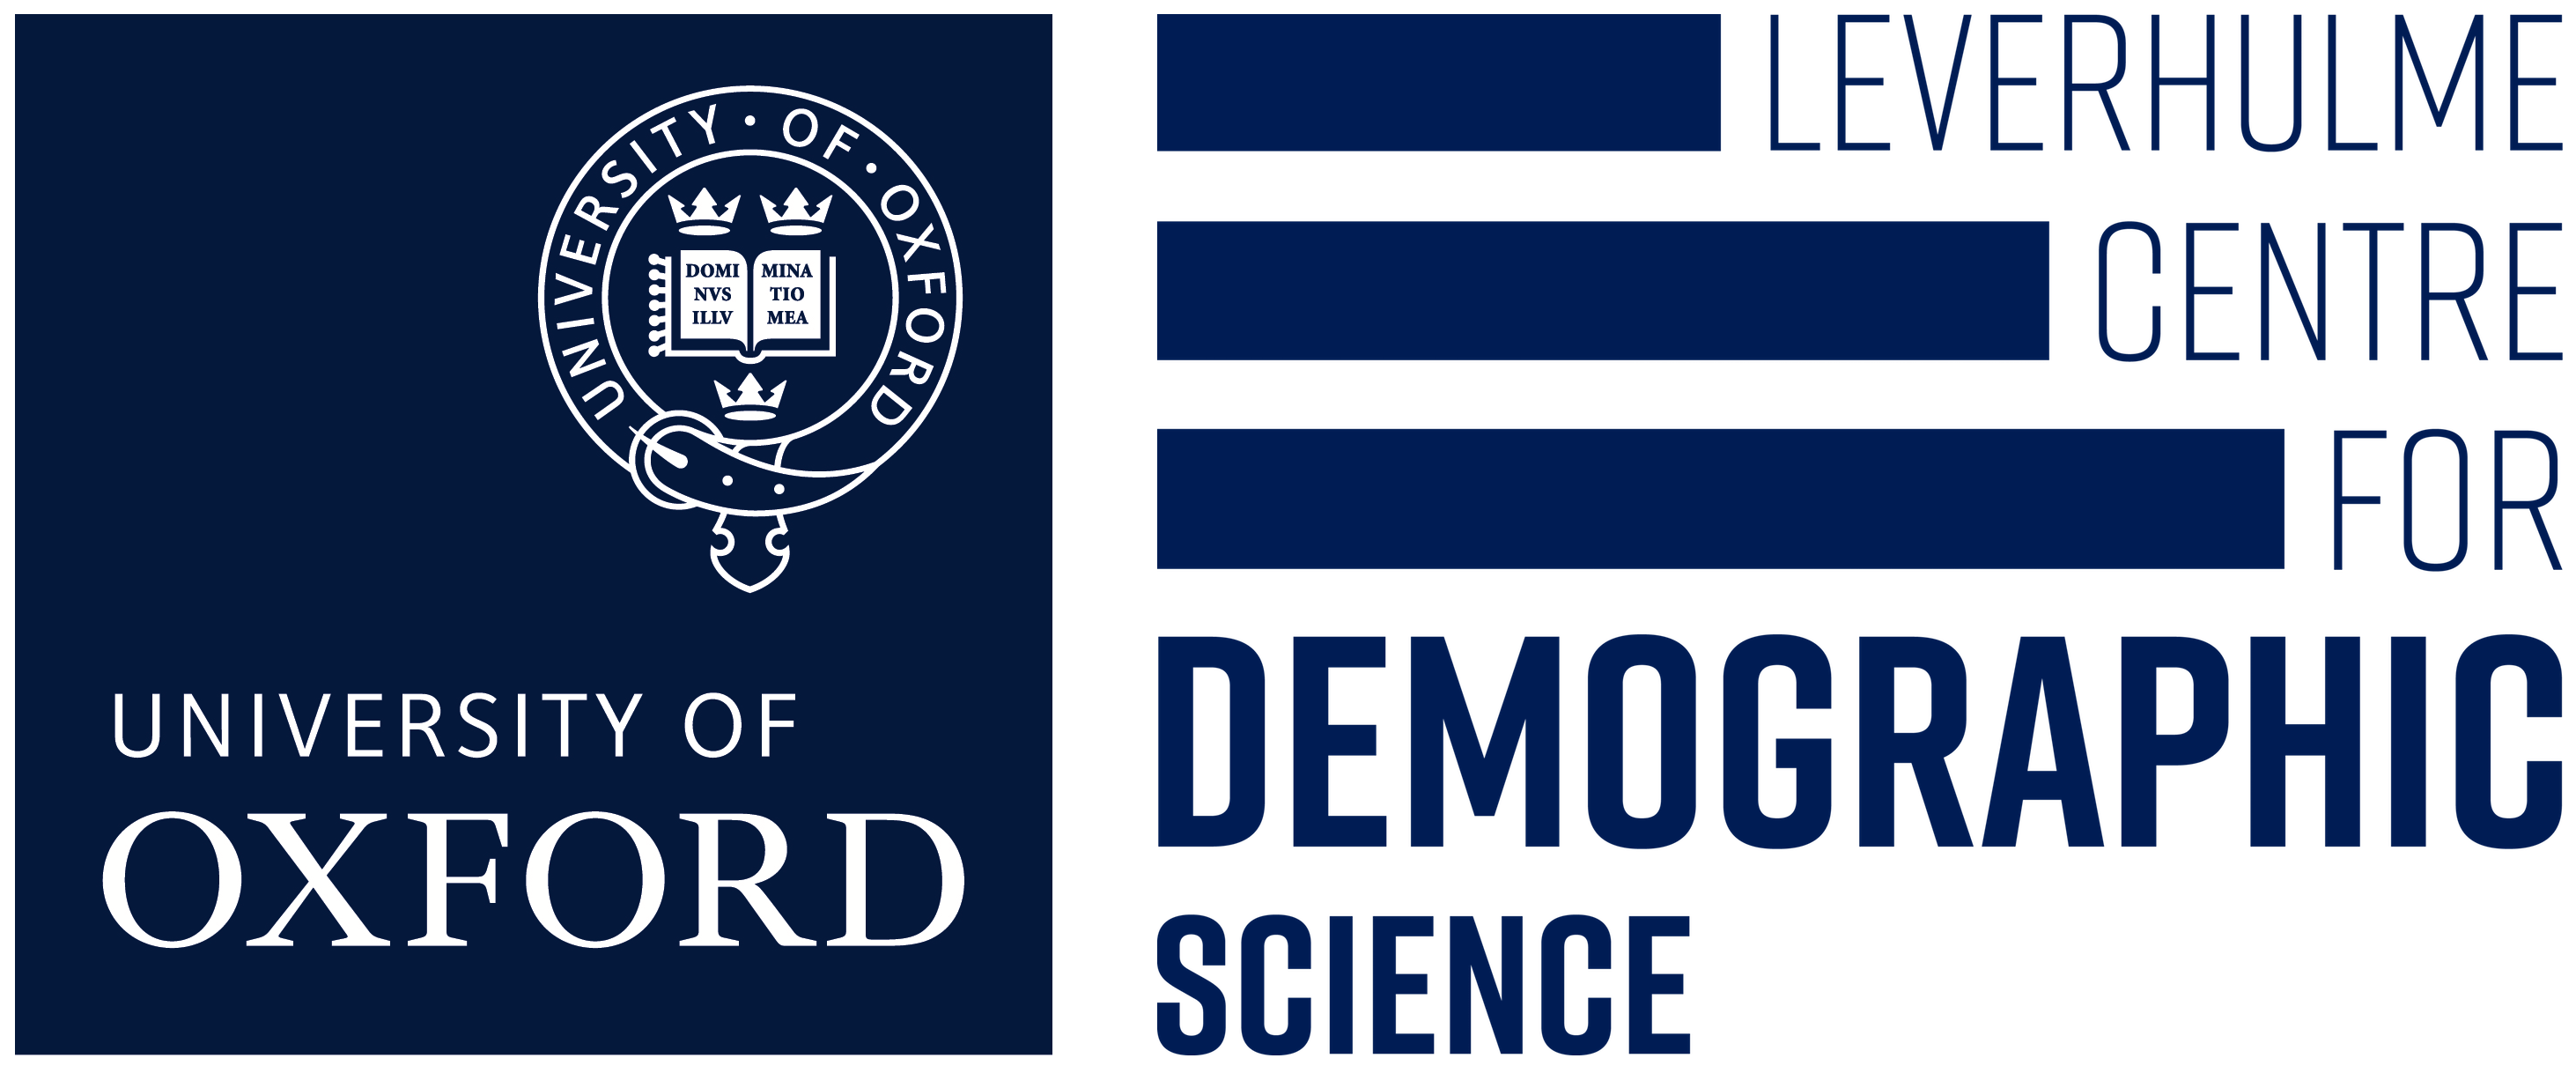 Leverhulme Centre for Demographic Science Logo